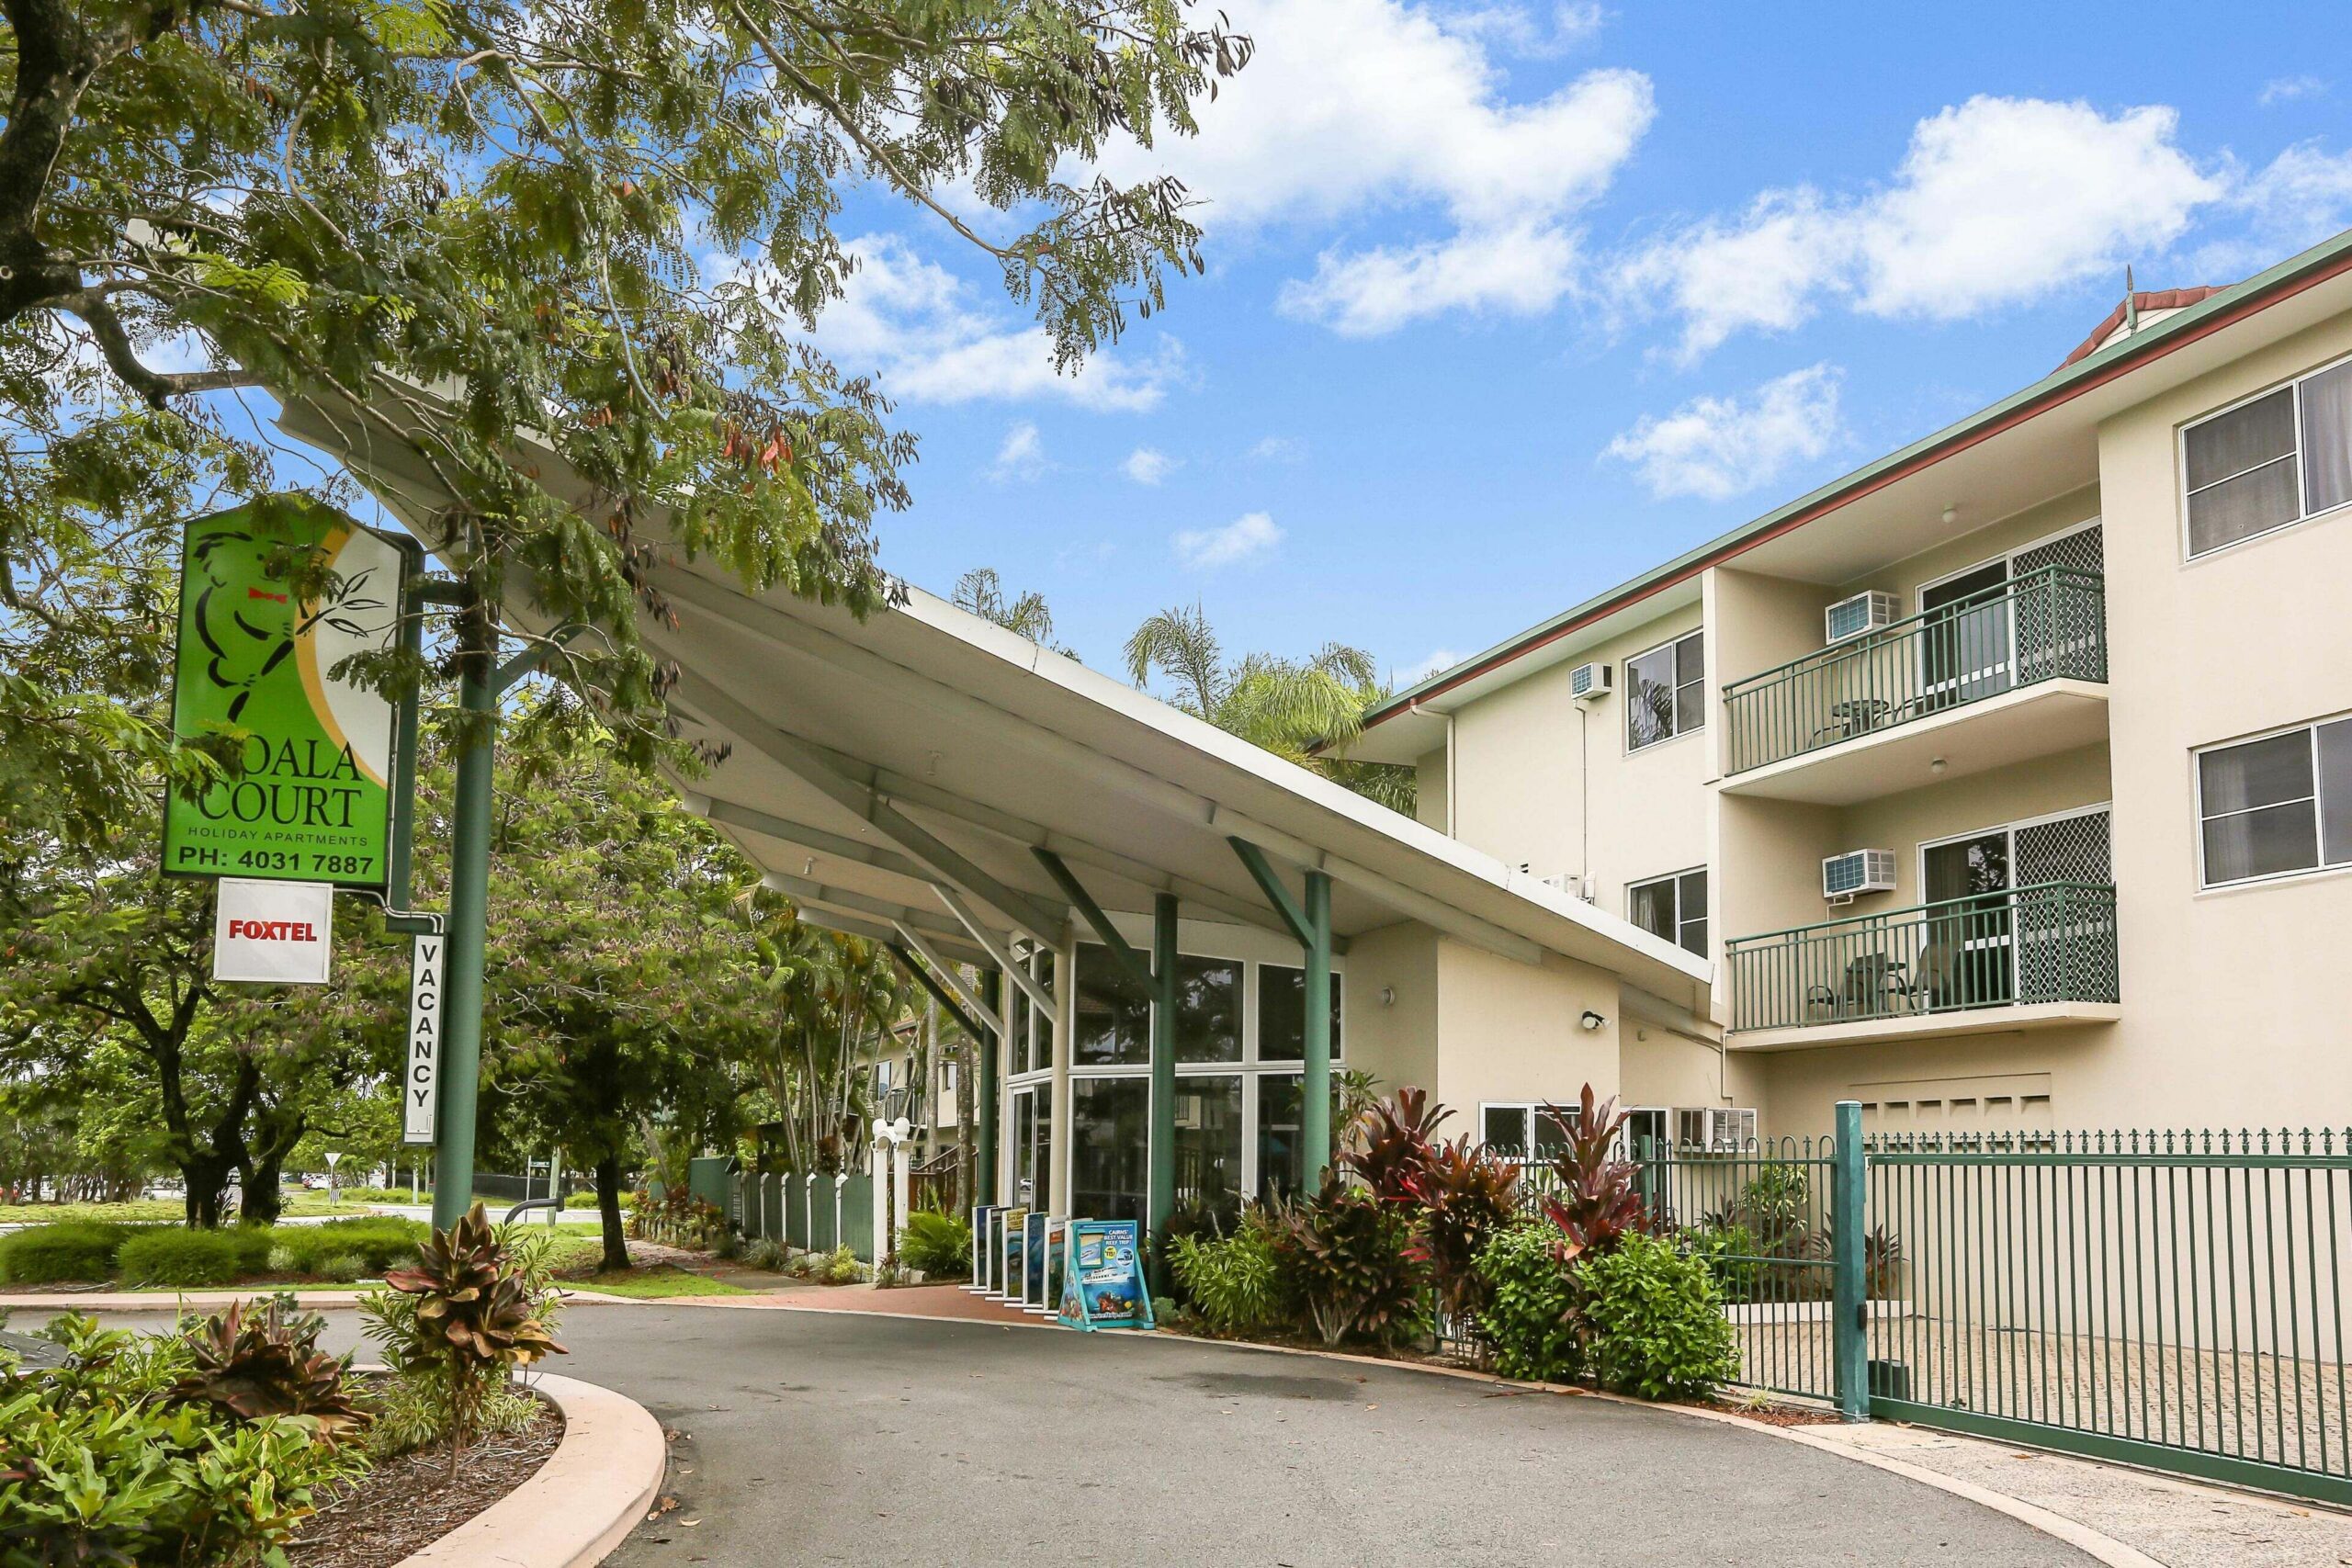 Koala Court Holiday Apartments